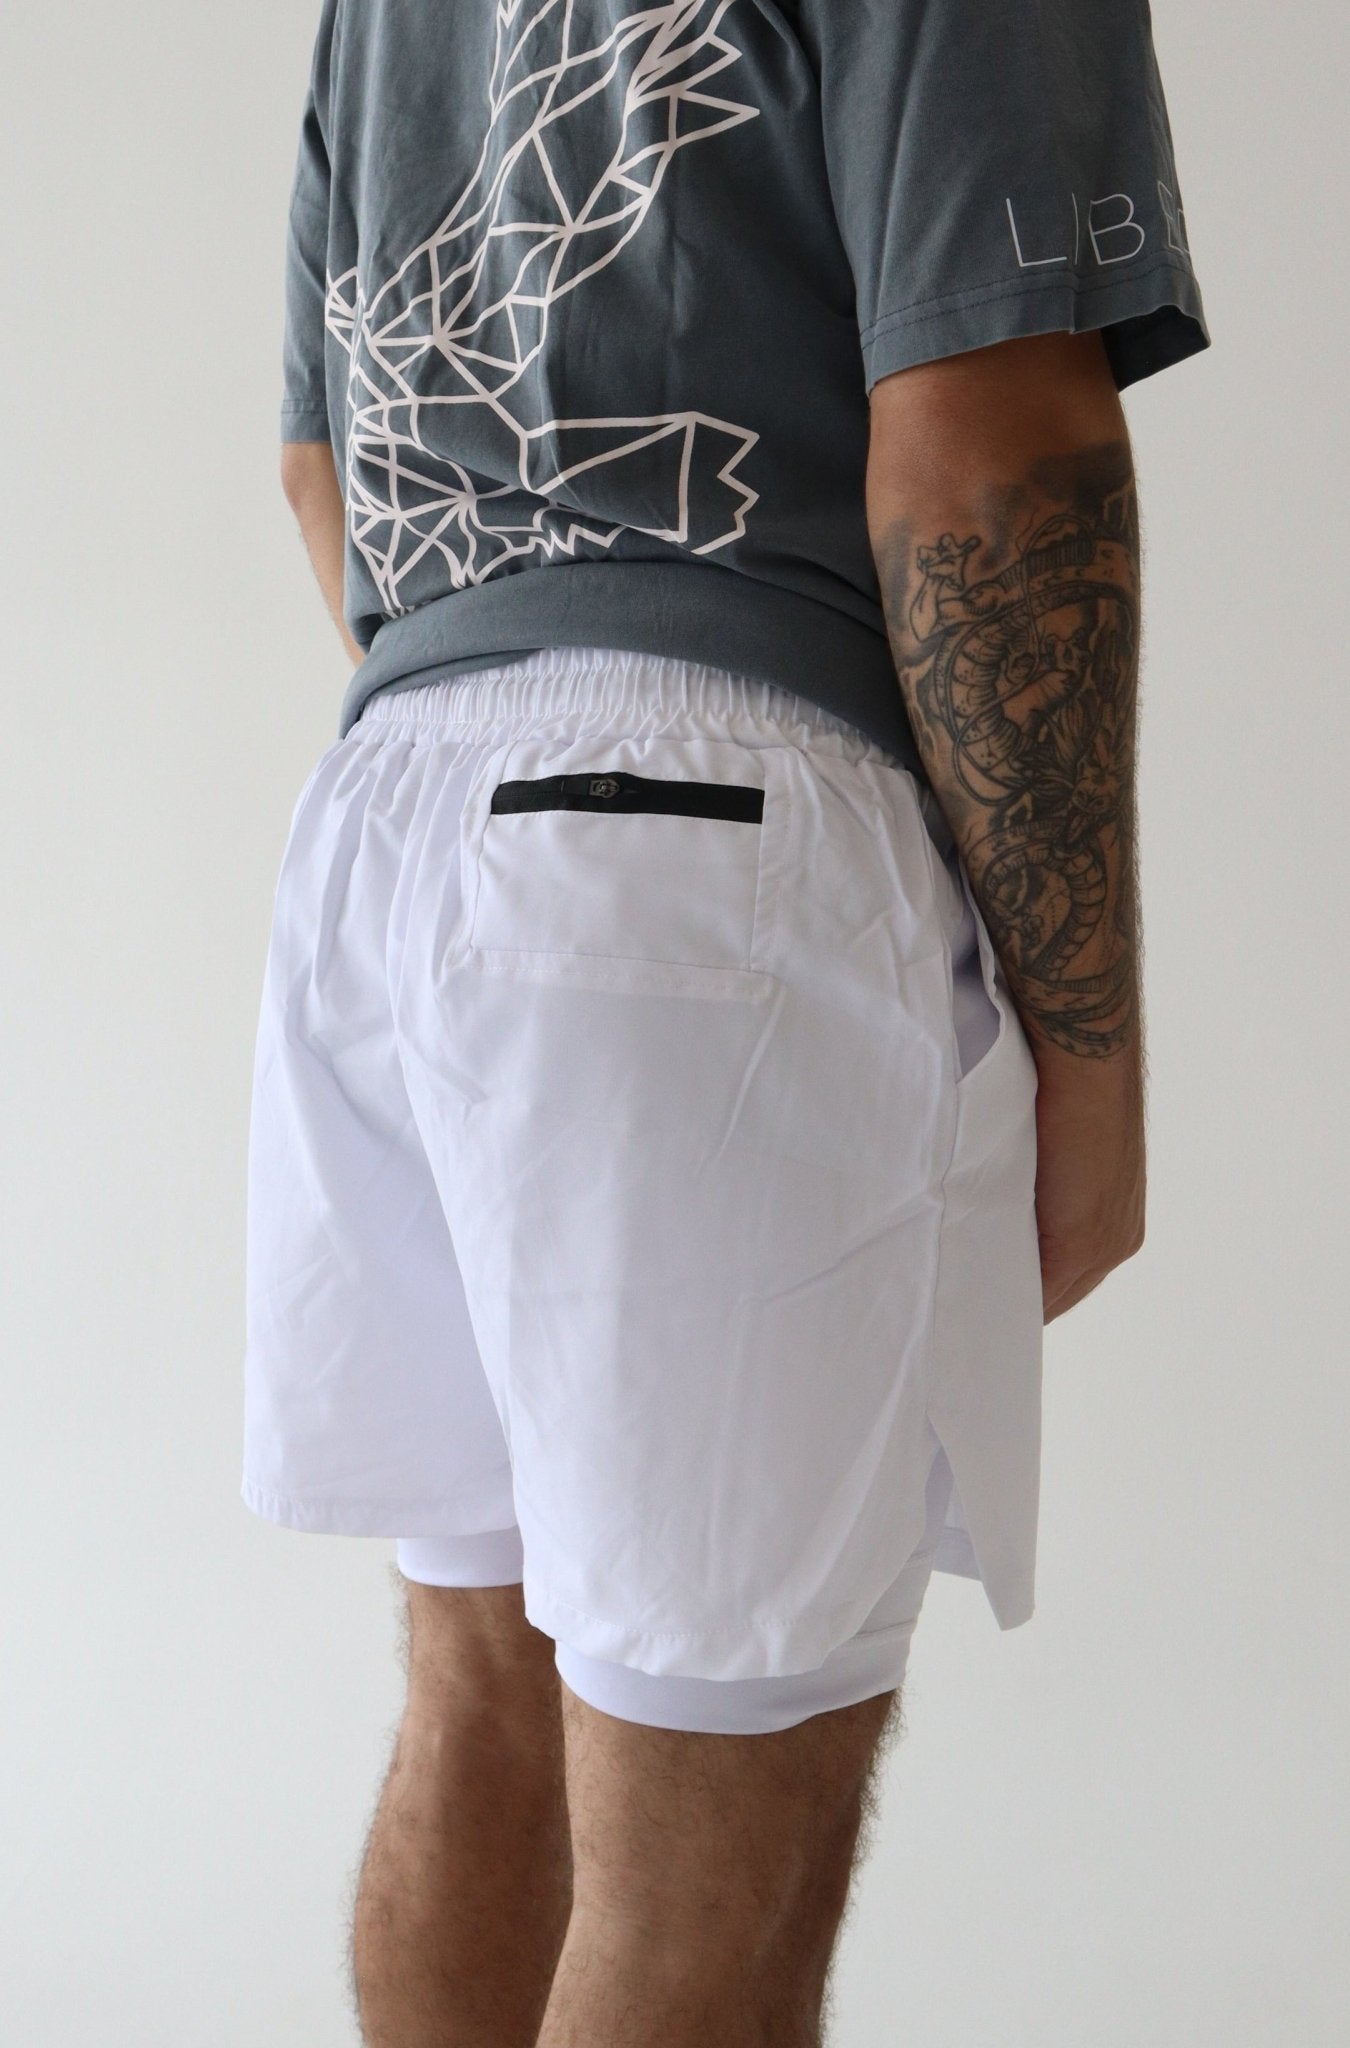 Magnify Shorts - WHITE - LIBERA Fitness Apparel